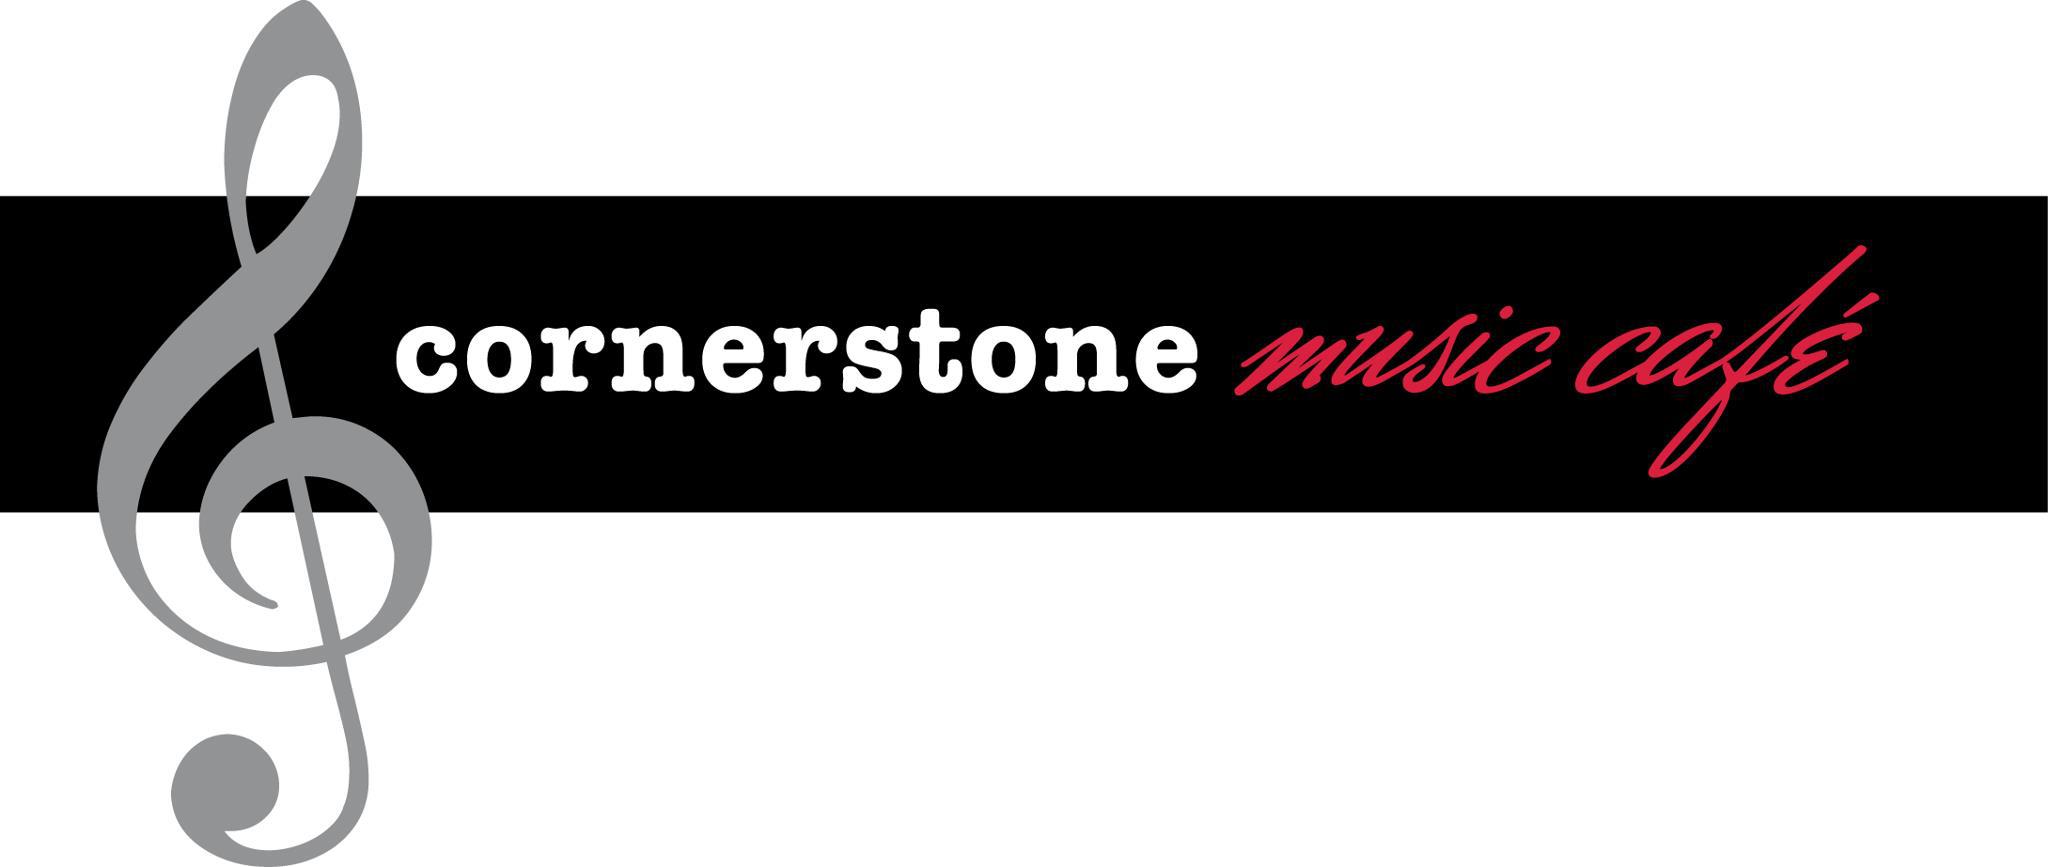 Cornerstone Music Cafe Logo